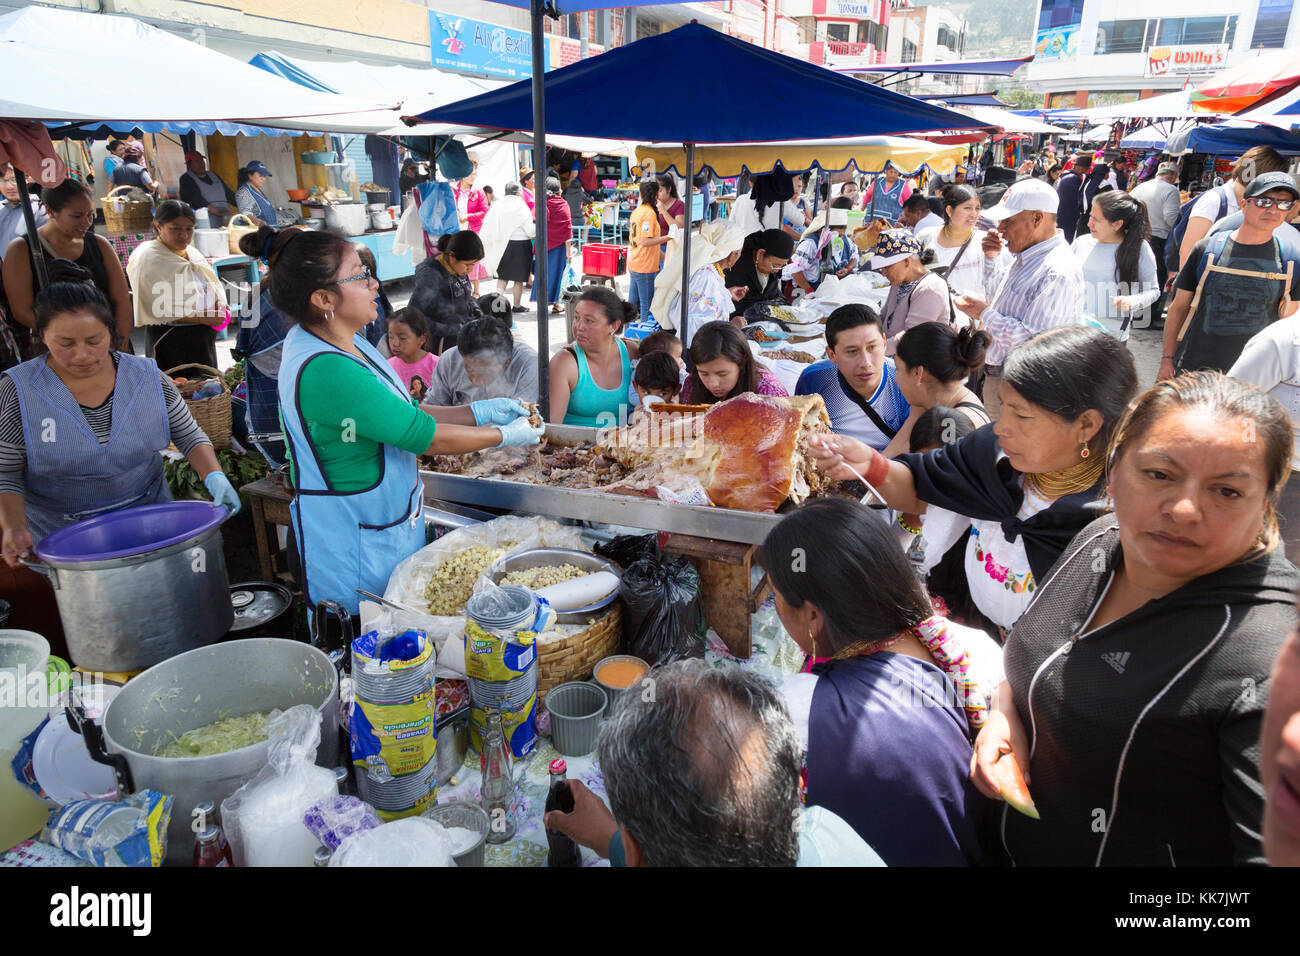 Otavalo market, Ecuador - crowds of people eating at the food market, Otavalo, northern Ecuador, South America Stock Photo